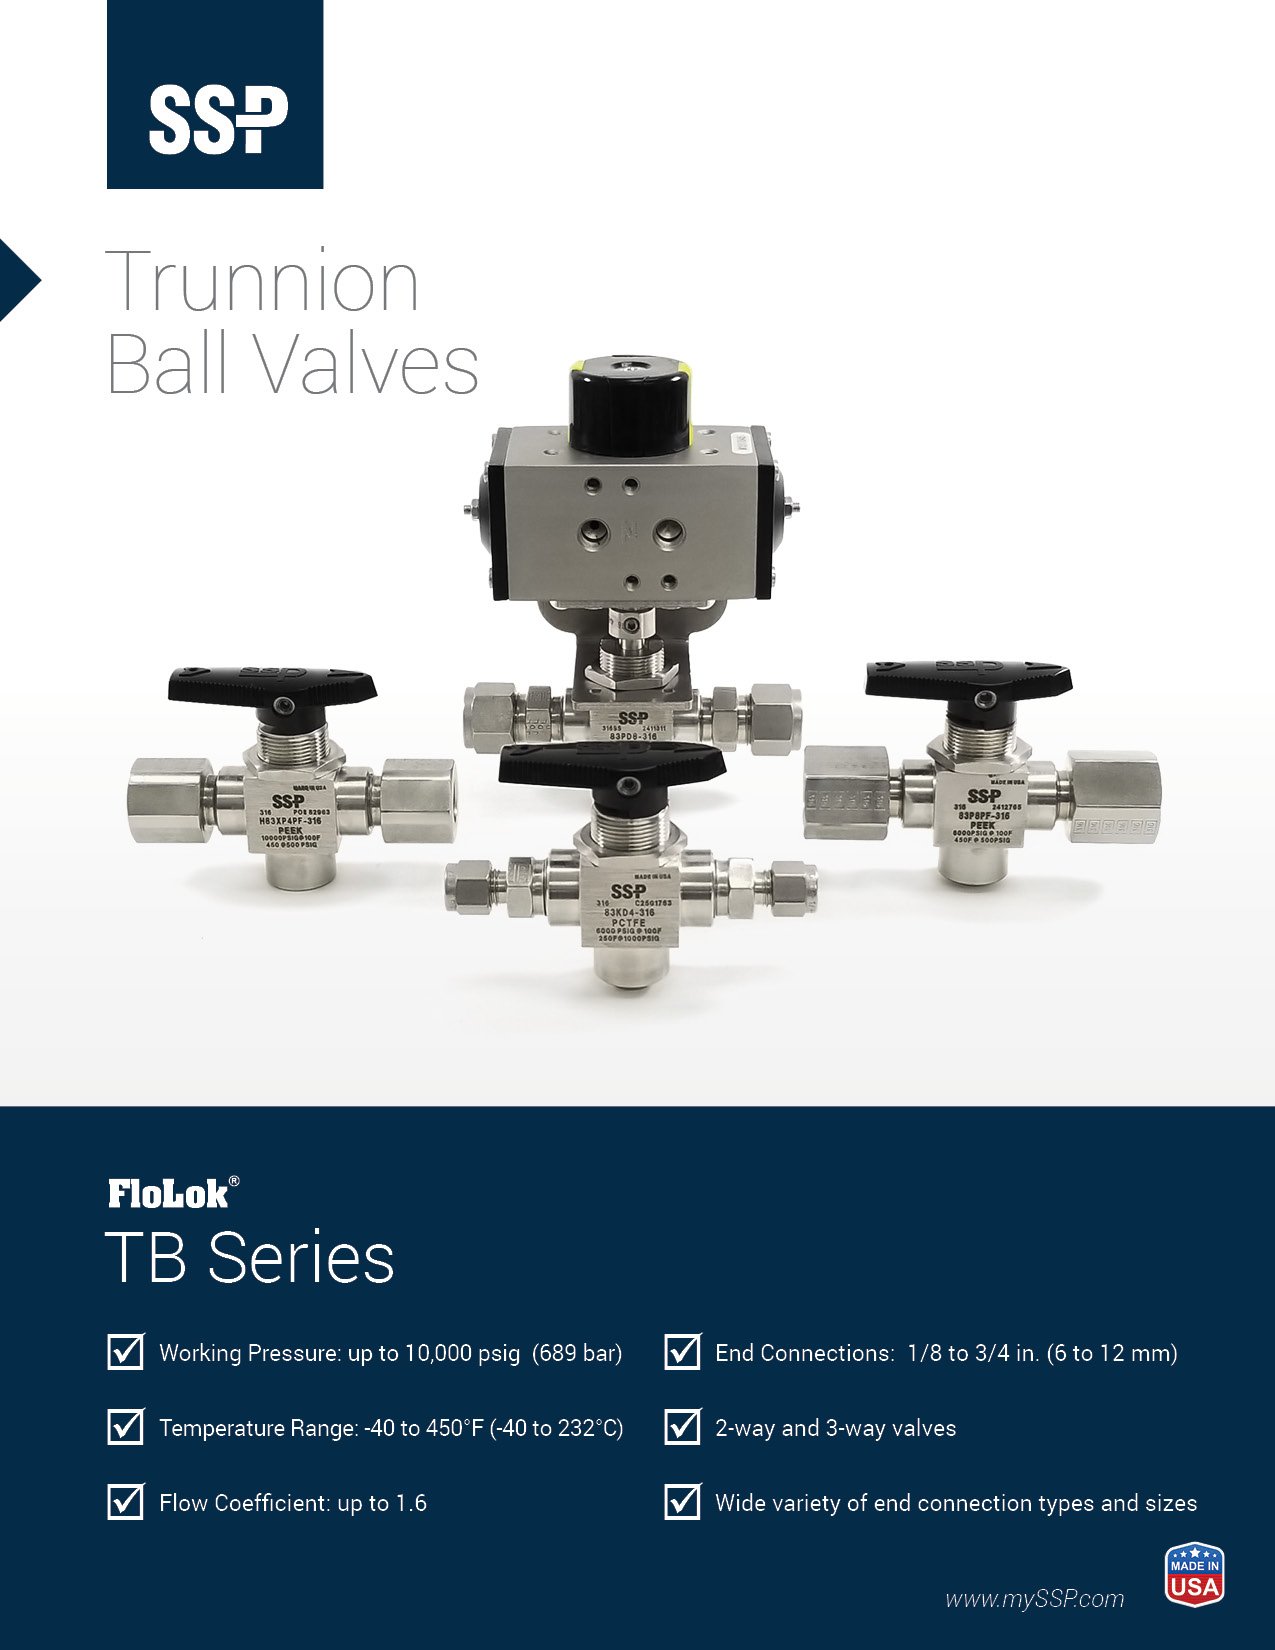 TB Series Ball Valve Catalog - TBPC Cover Image